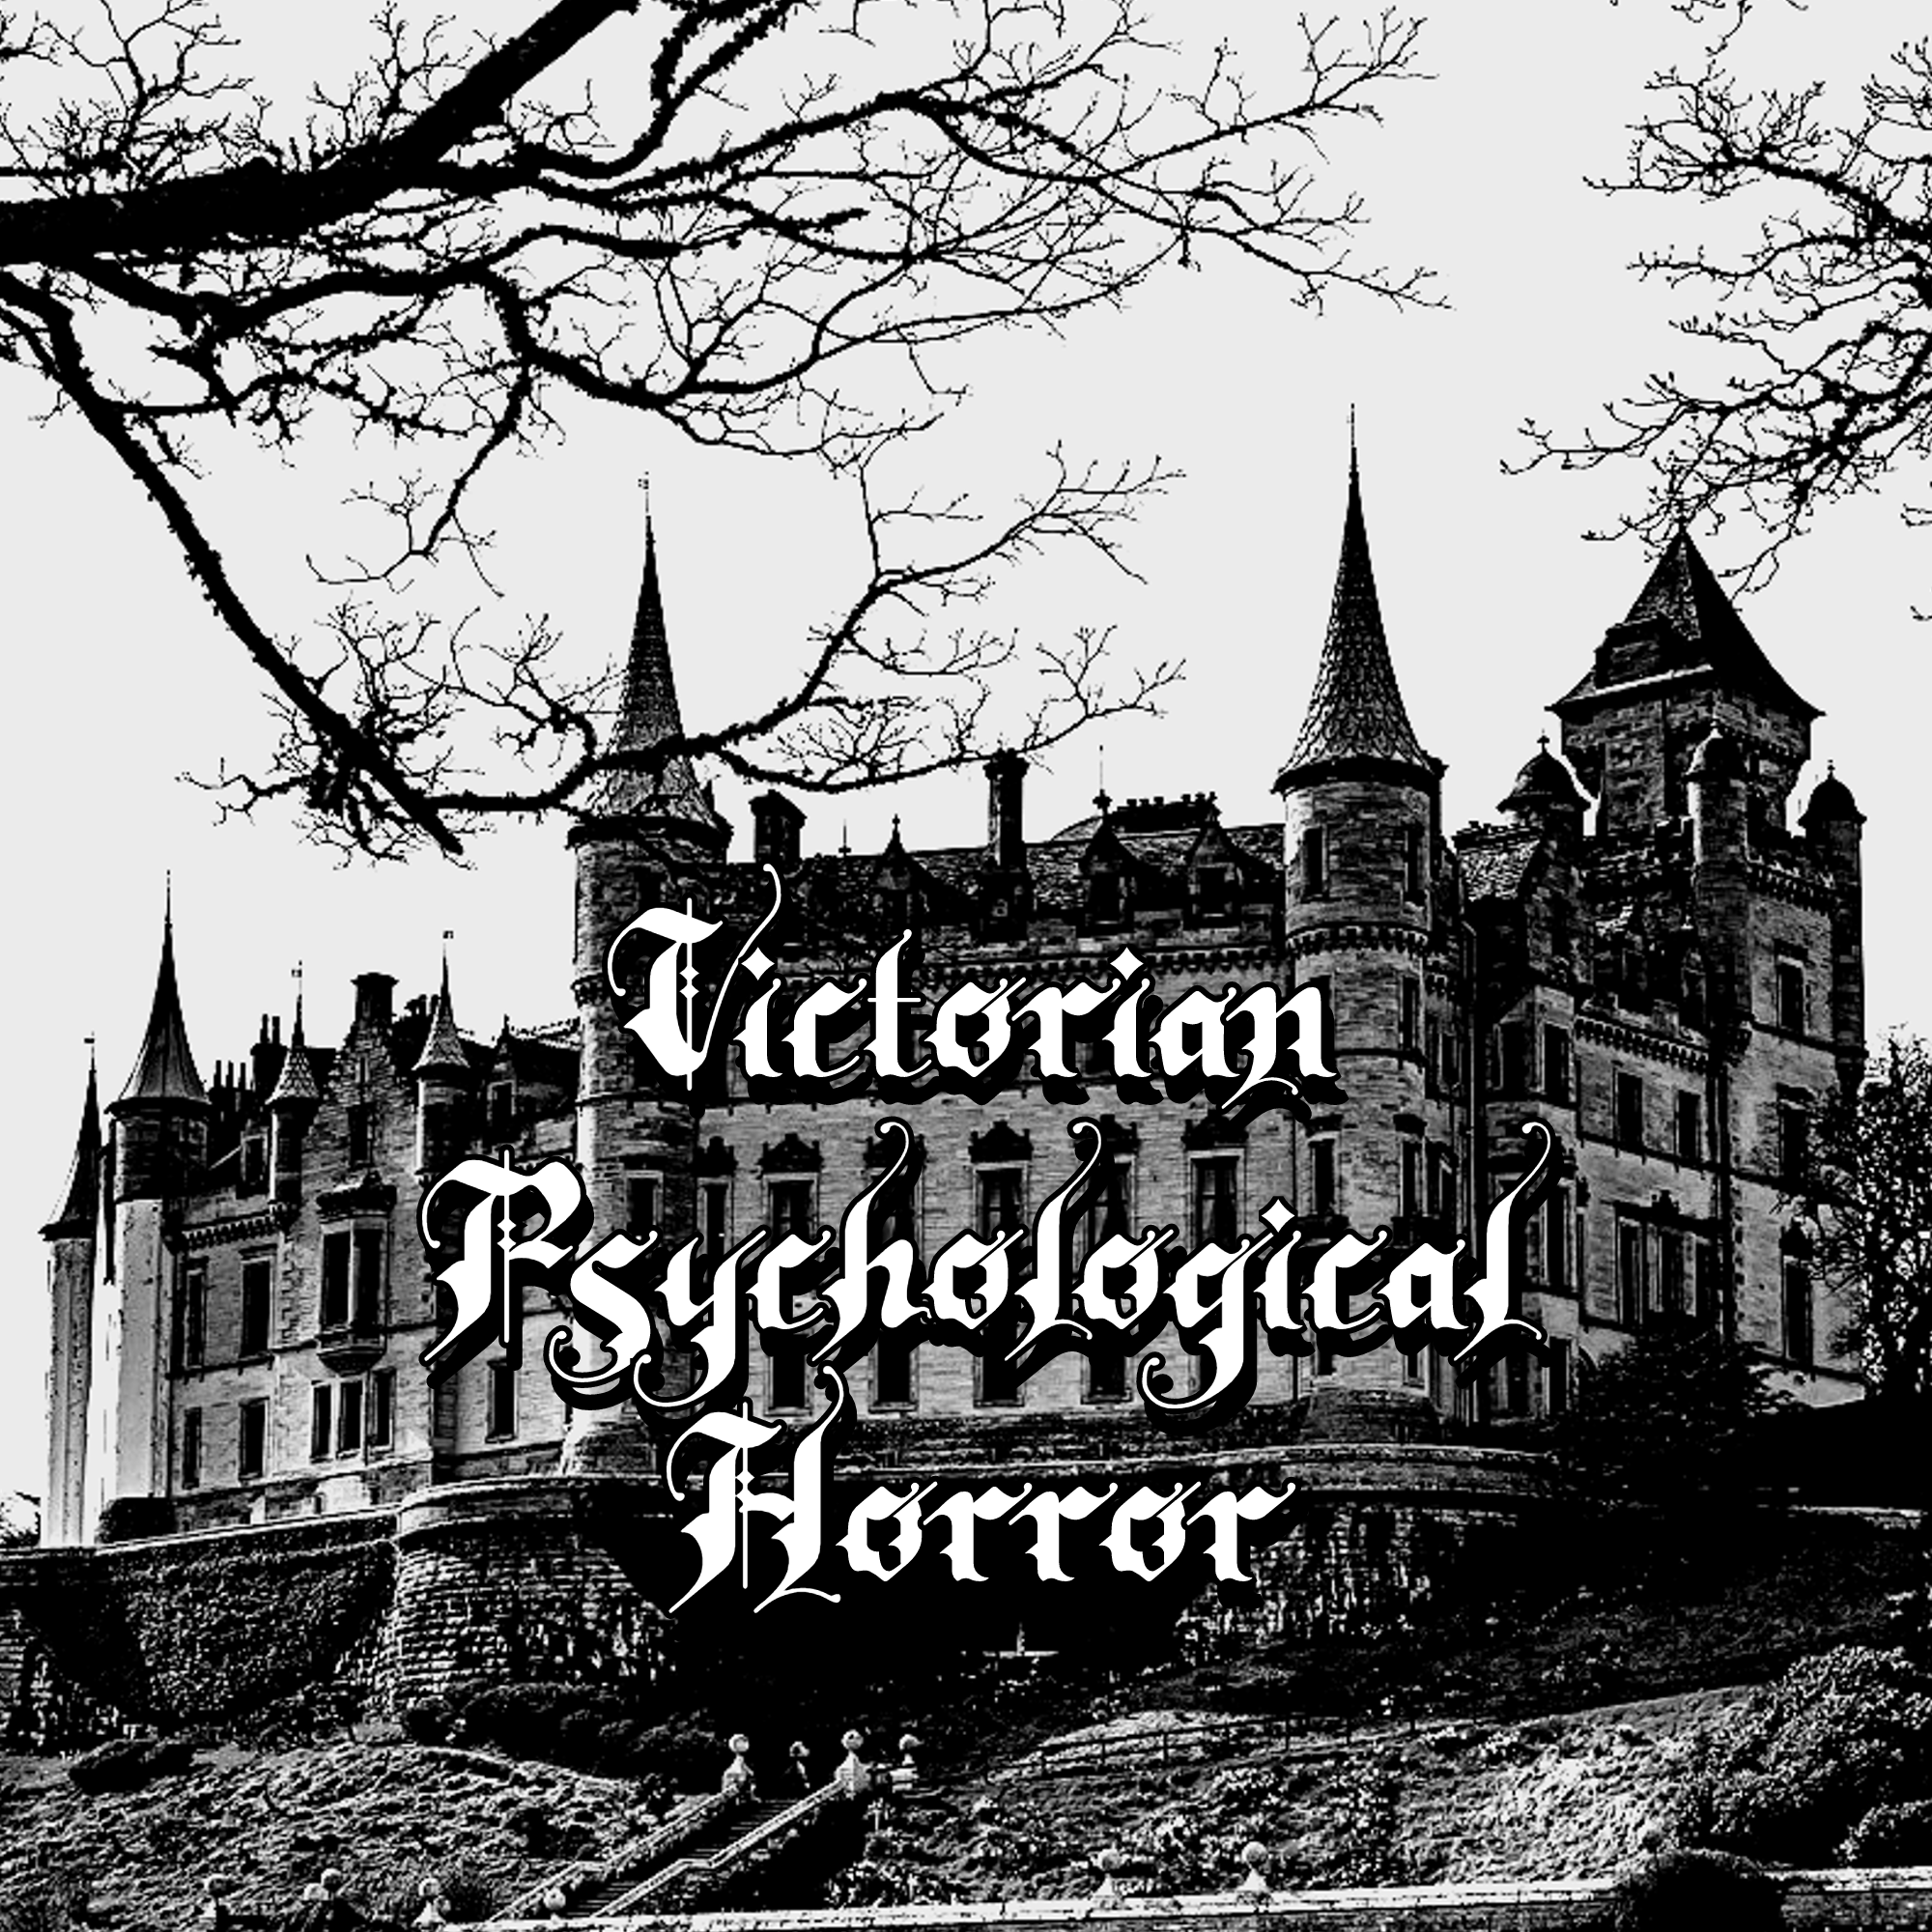 Victorian Psychological Horror